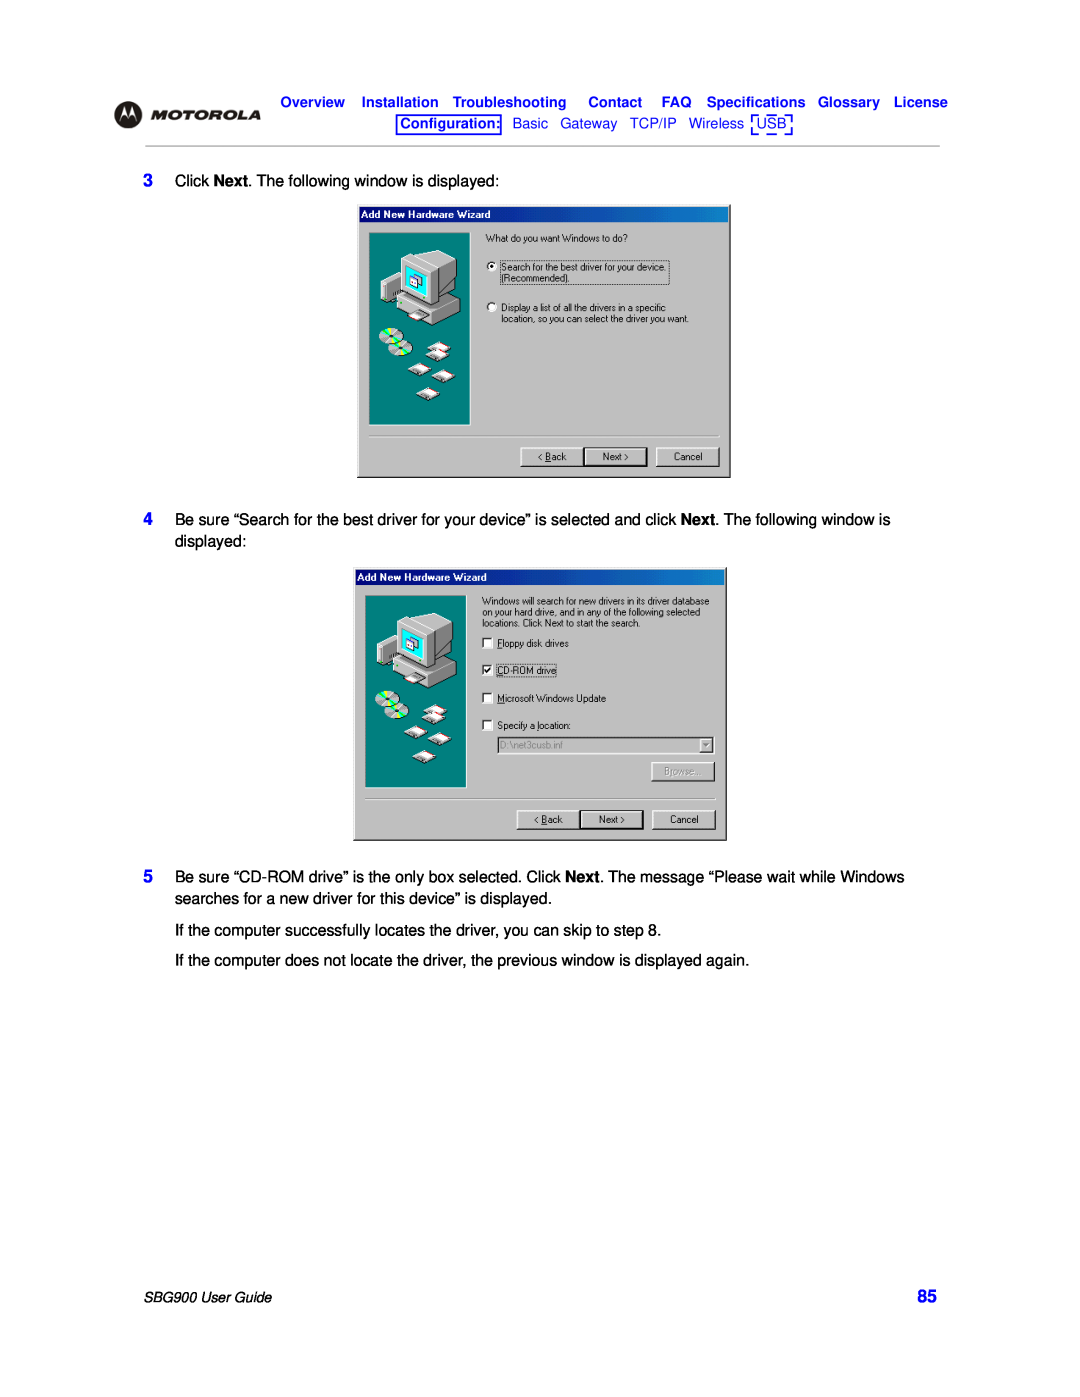 Motorola SBG900 manual Click Next. The following window is displayed 